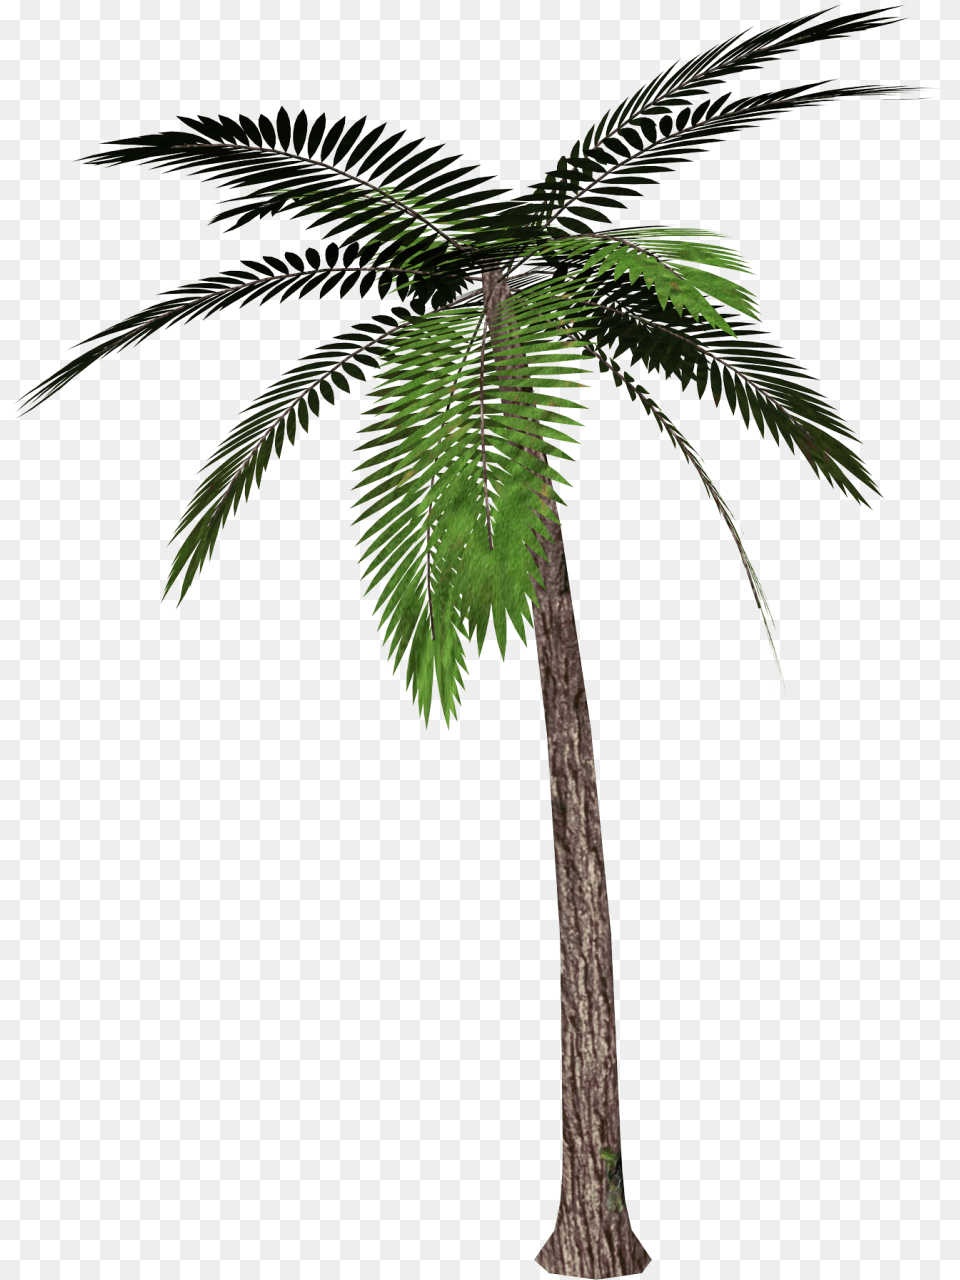 Palm Tree Transparent Background, Palm Tree, Plant, Fern Png